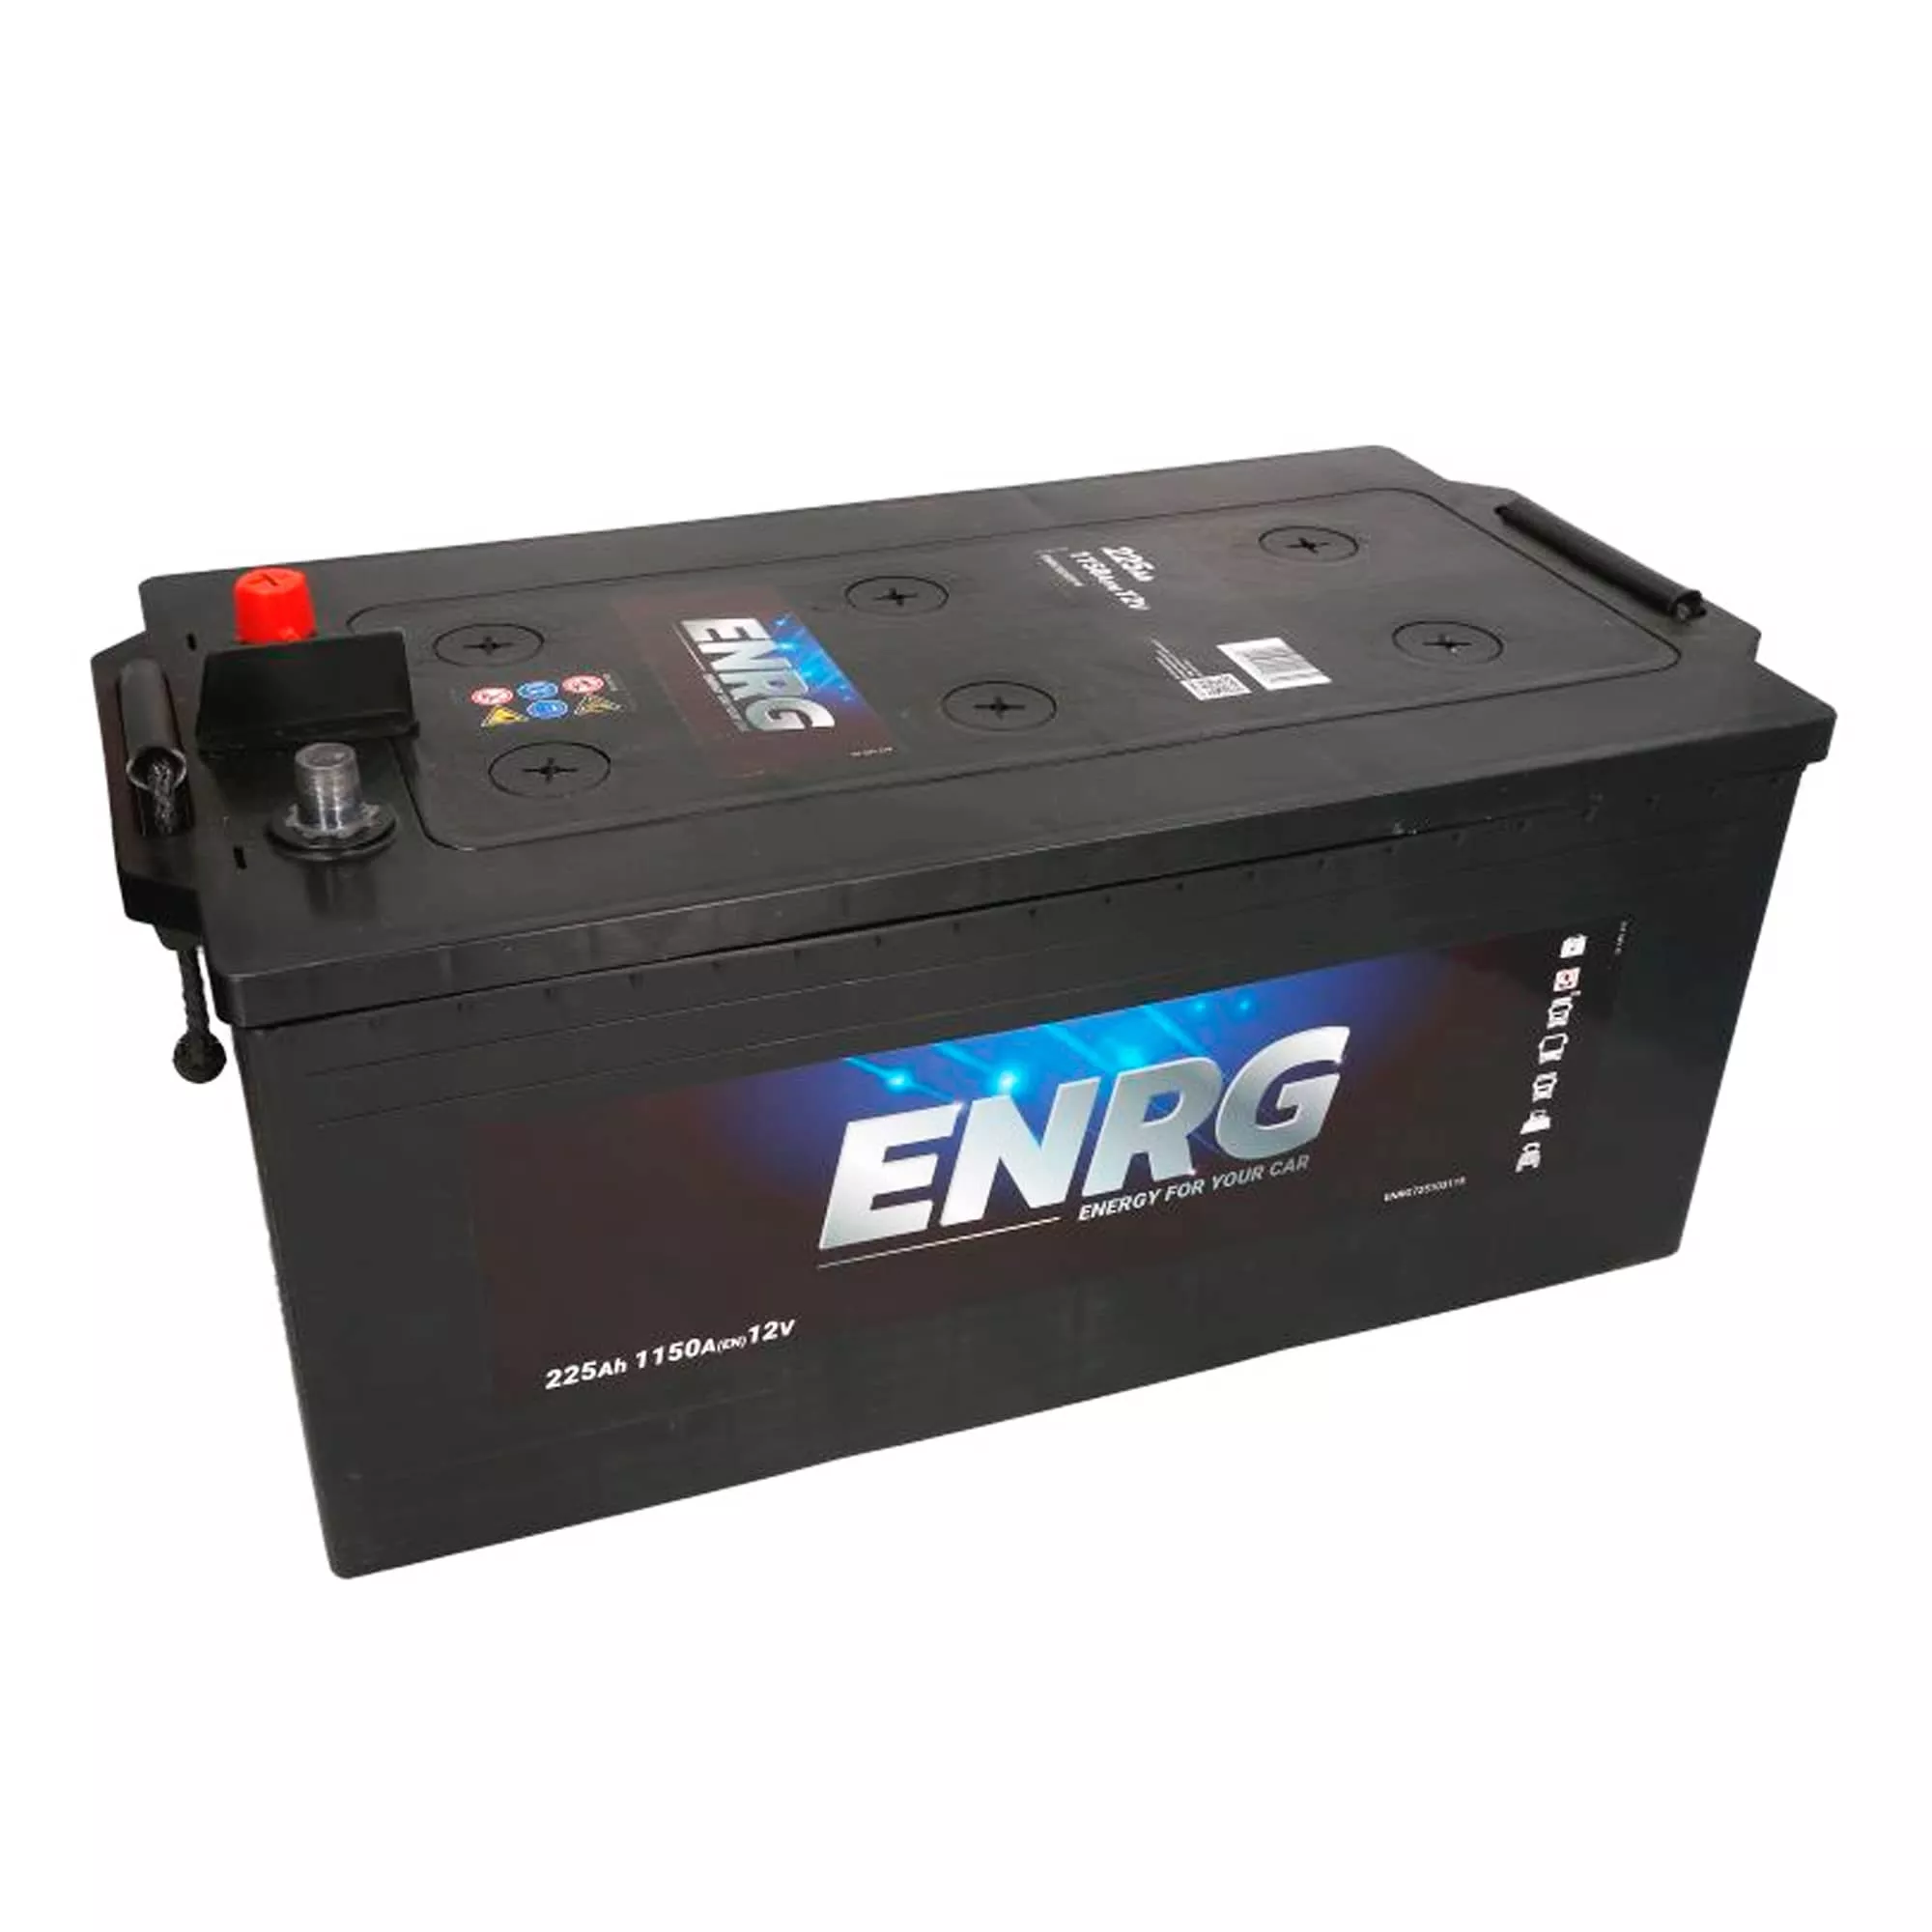 Грузовой аккумулятор ENRG 12В 225AH Аз 1150A SHD (ENRG725103115)